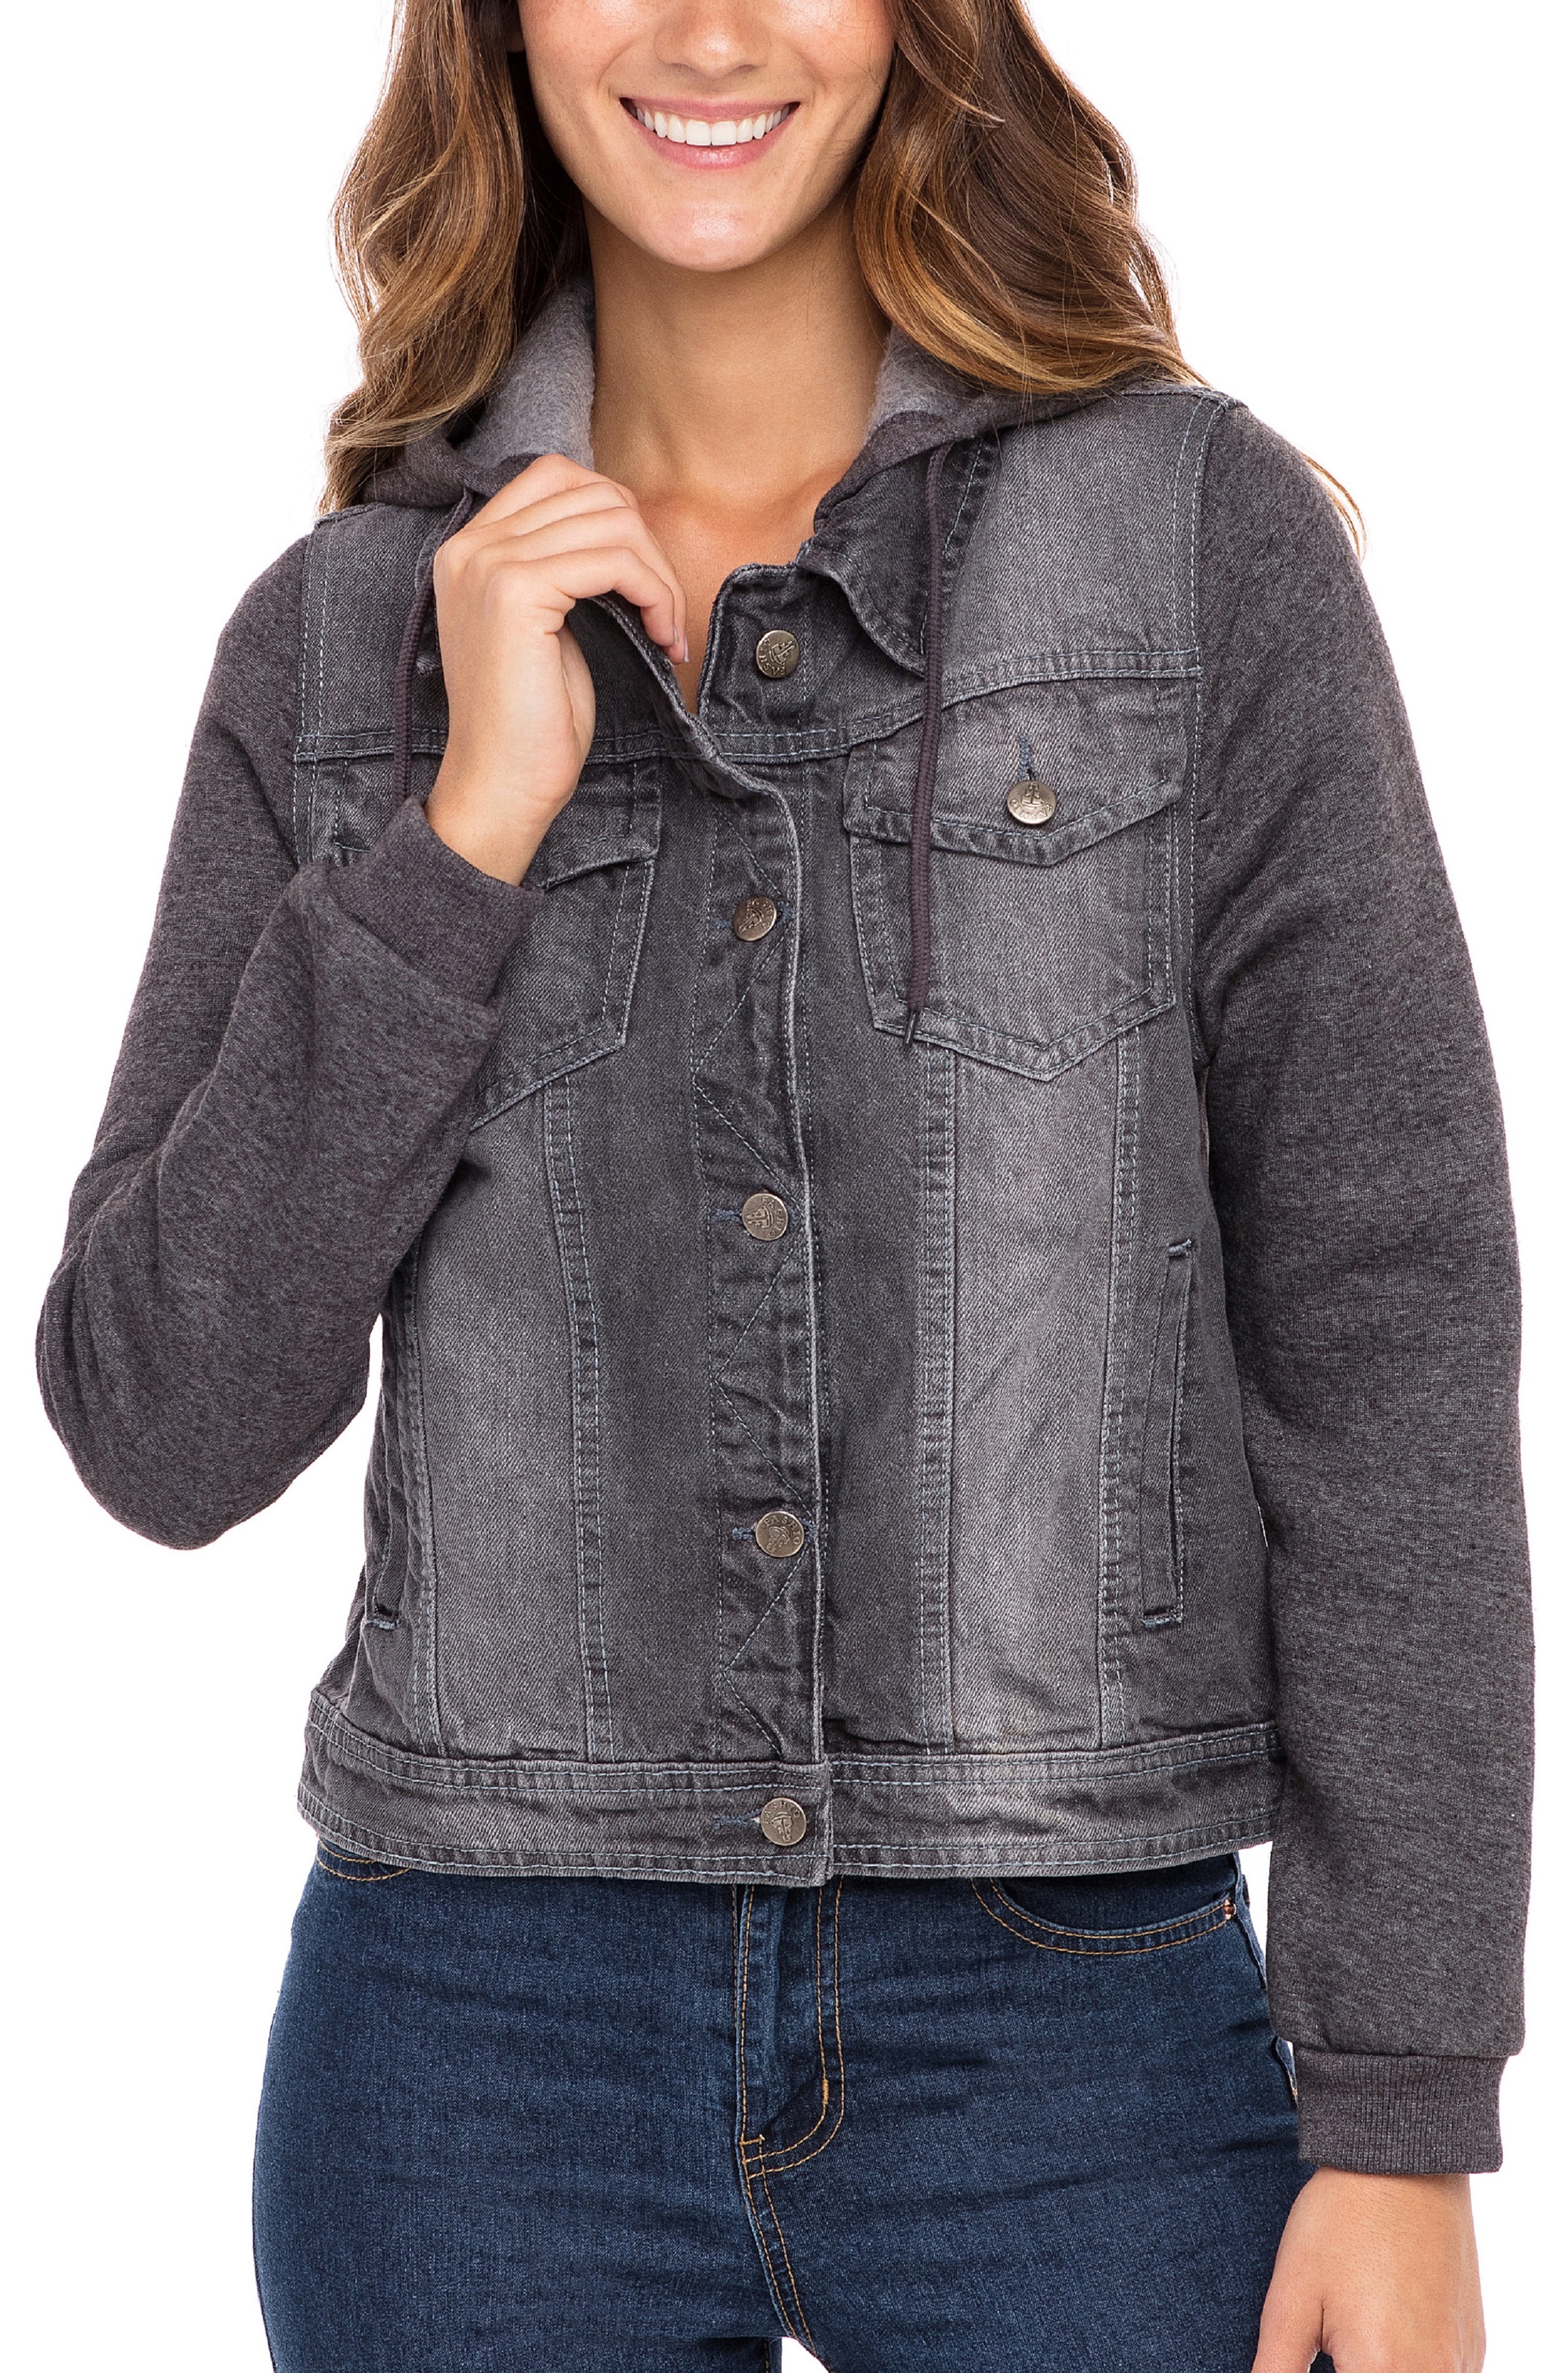 SKYLINEWEARS Women's Hooded Denim Jacket Long Sleeve Layered Drawstring Hoodie Washed Jean Jacket Grey Small - image 2 of 6